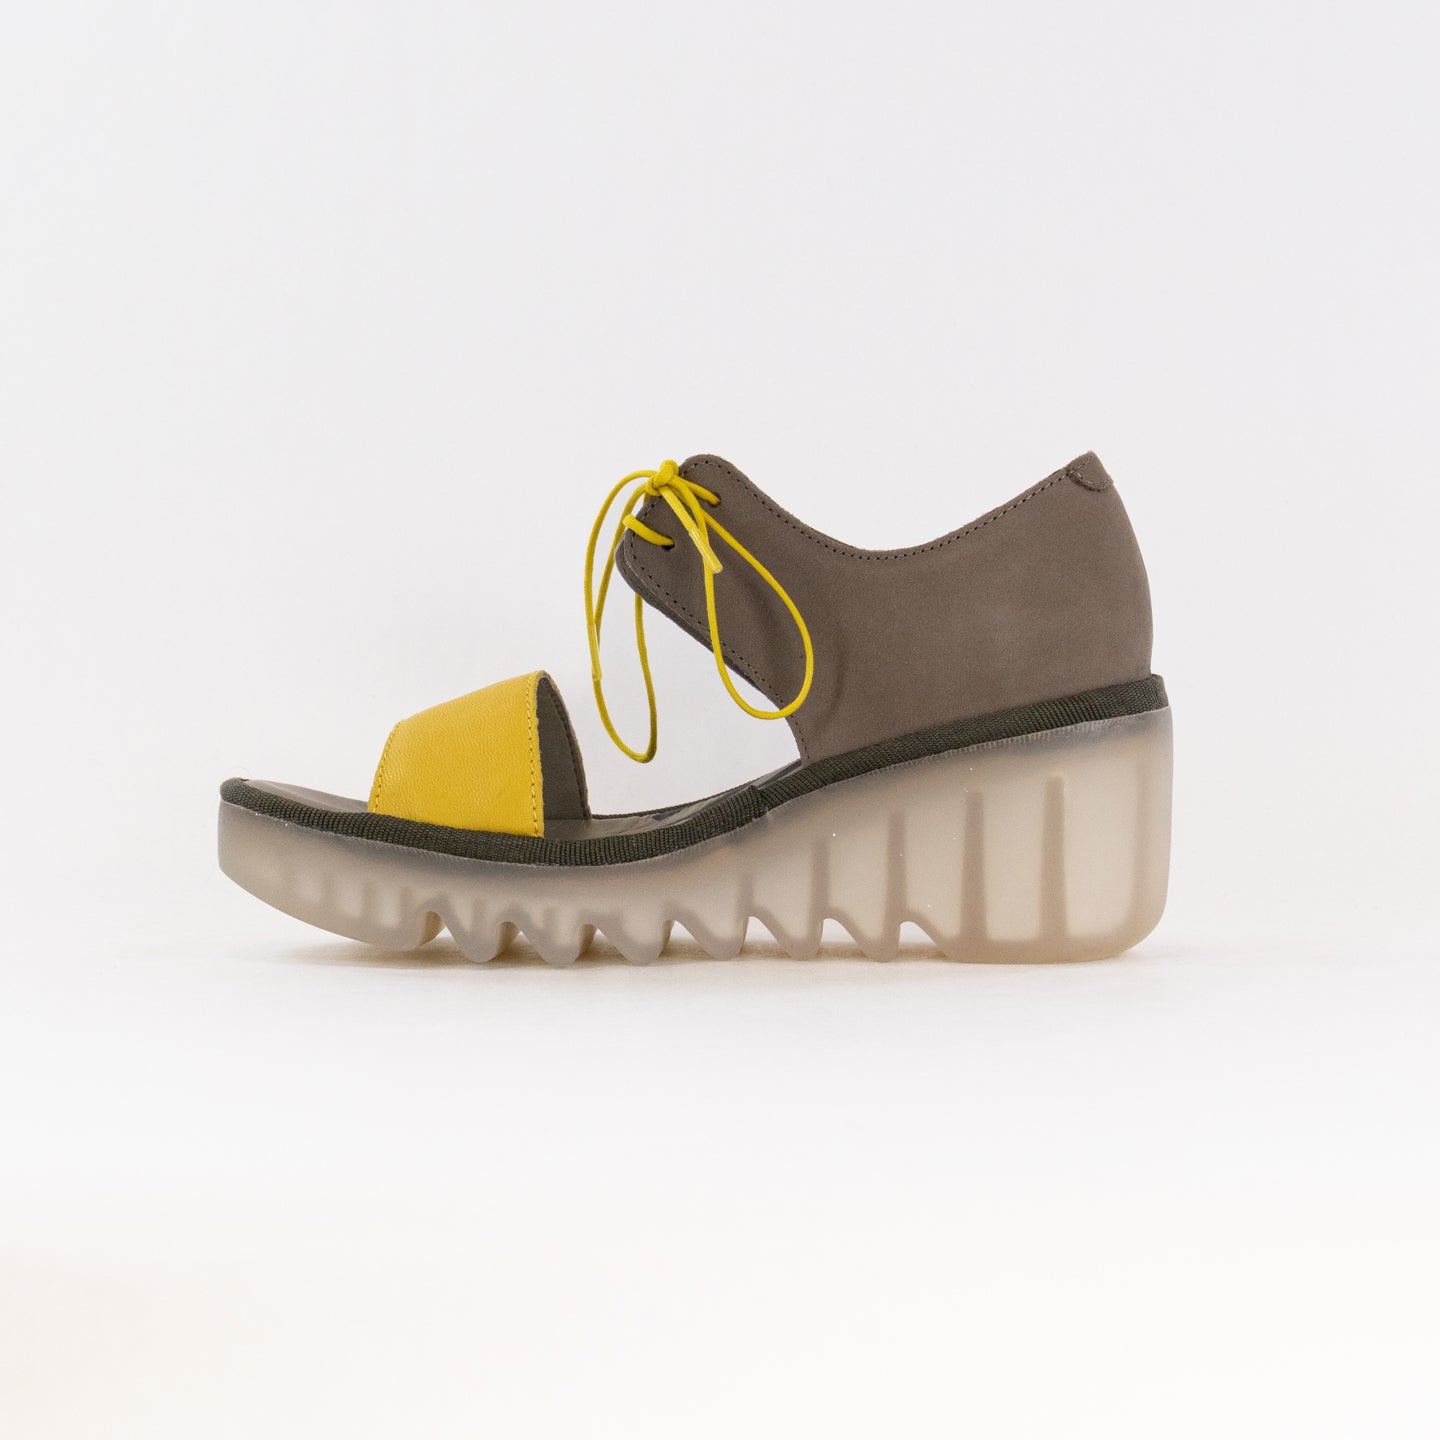 FLY London Crossover Sandals BILU465FLY (Women's) - Yellow/Khaki